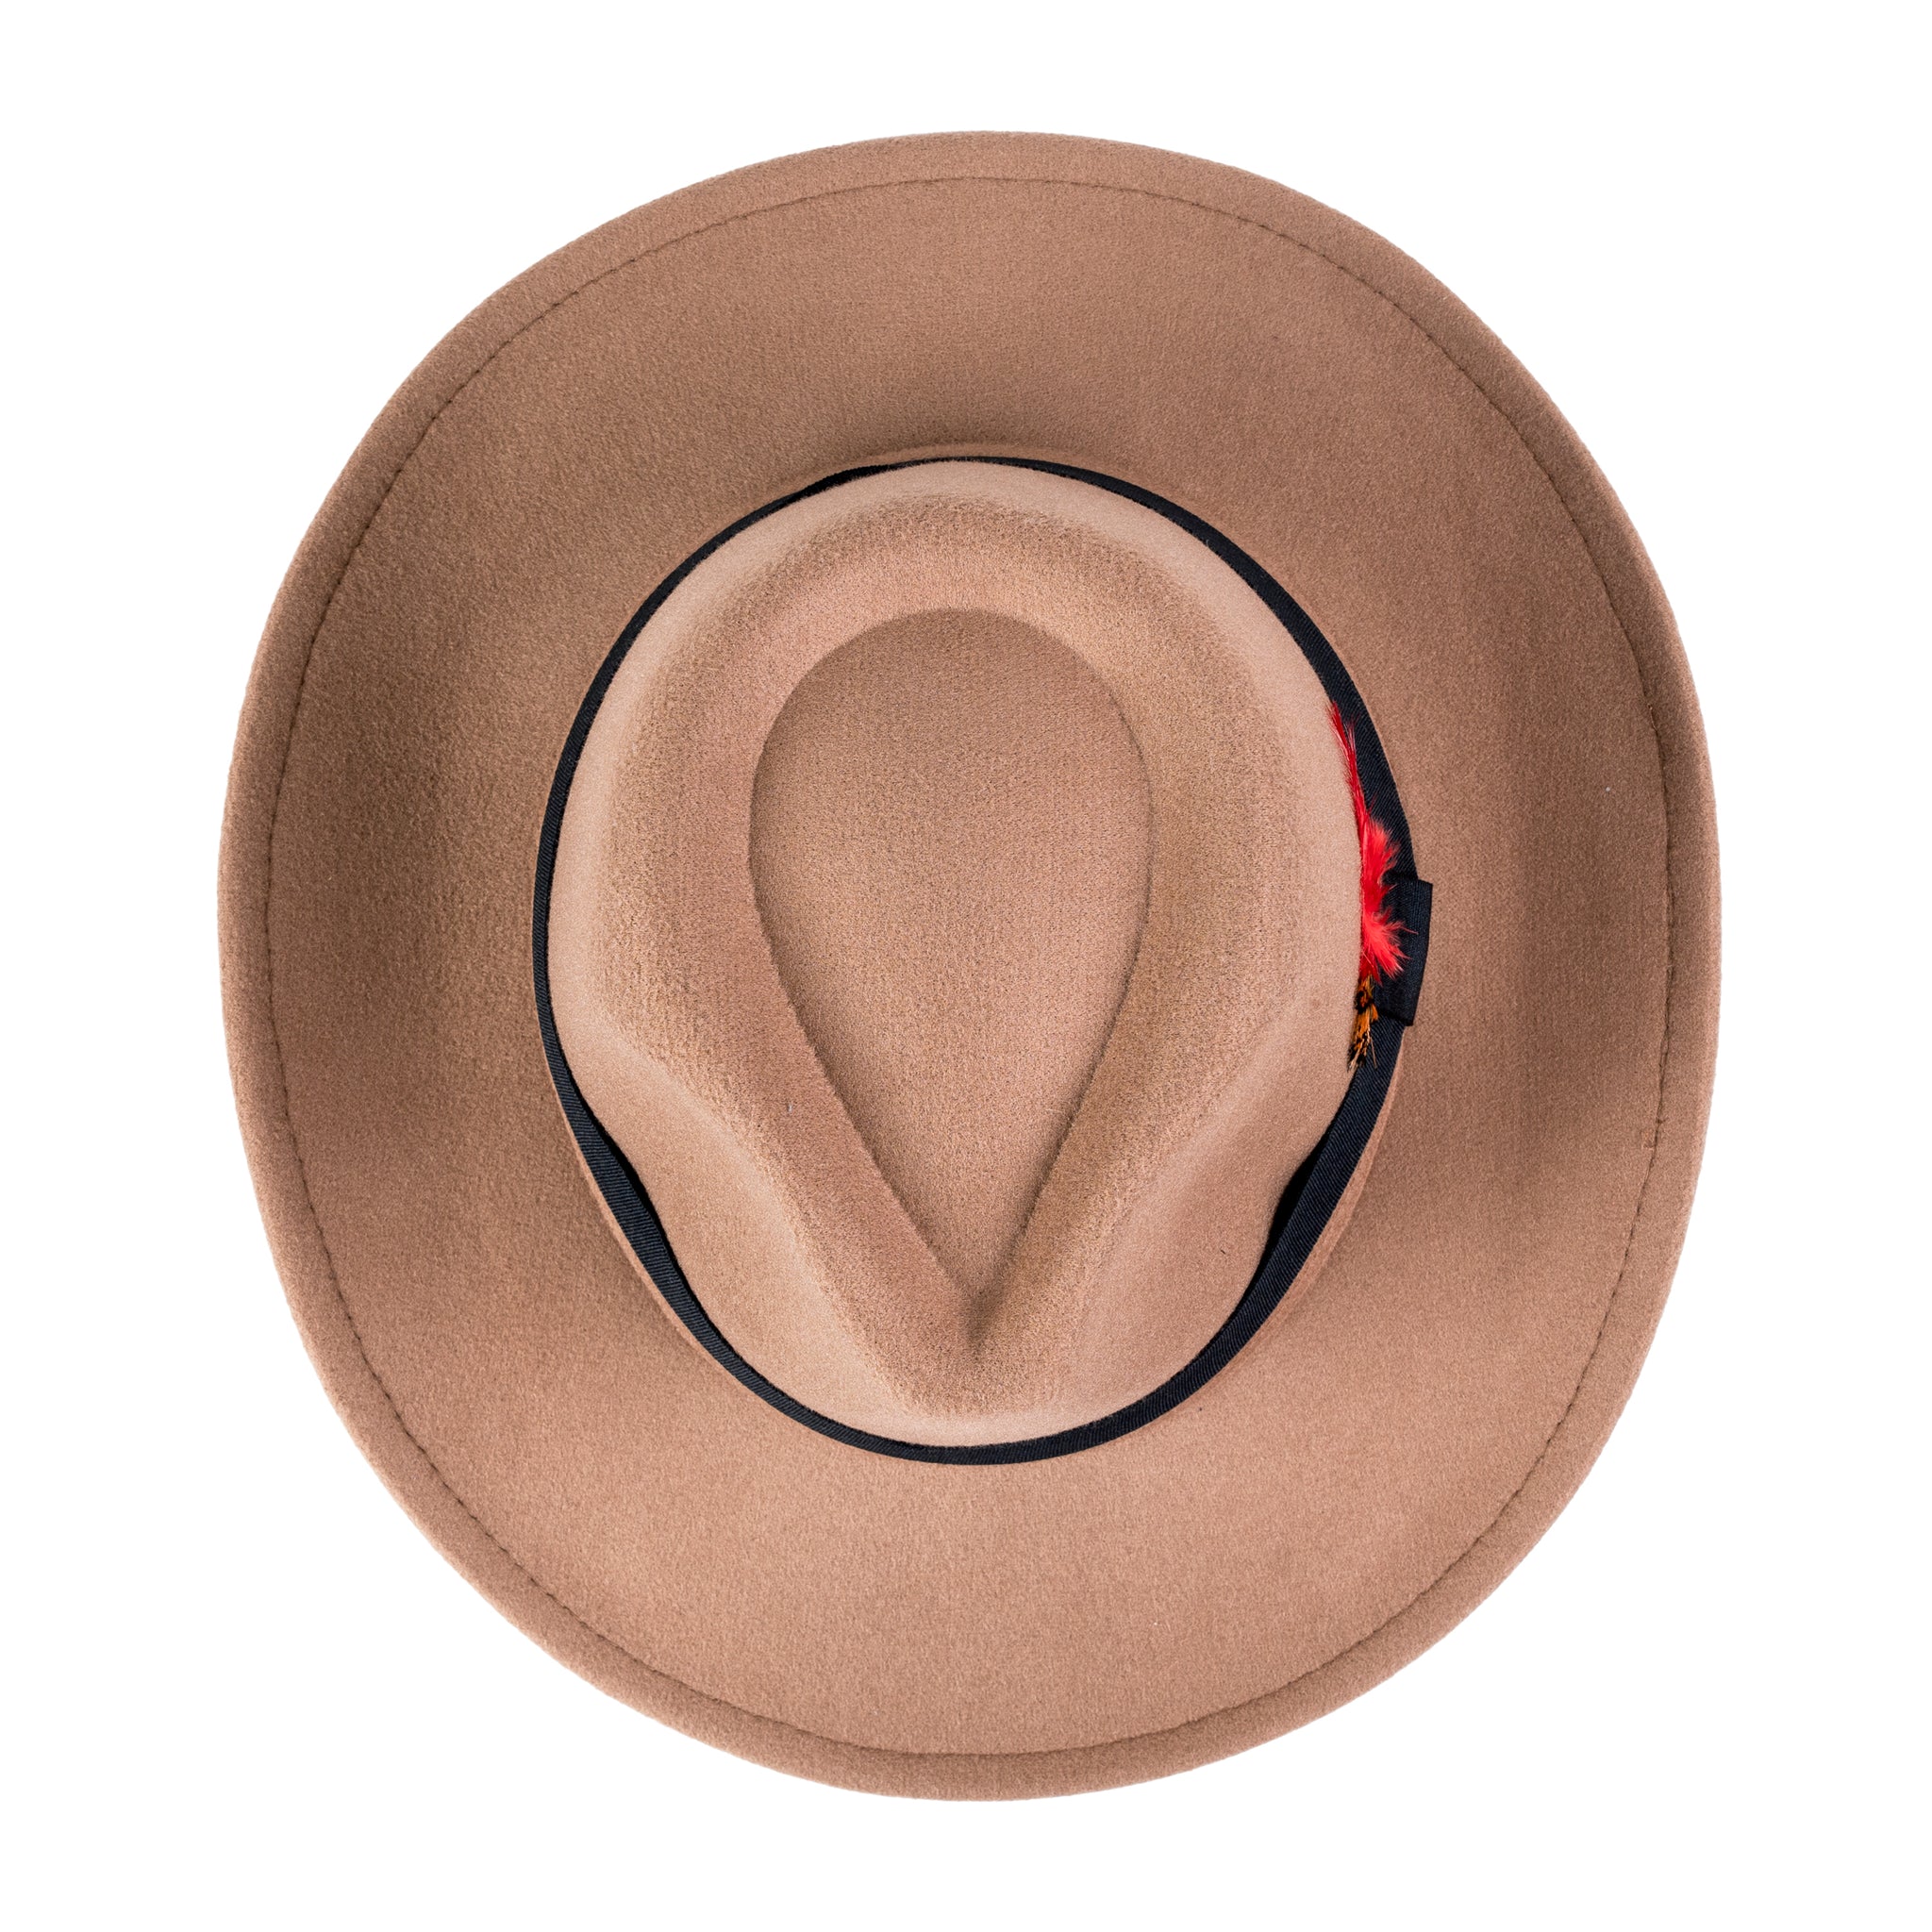 Chokore Cowboy Hat with Feather Details (Khaki)